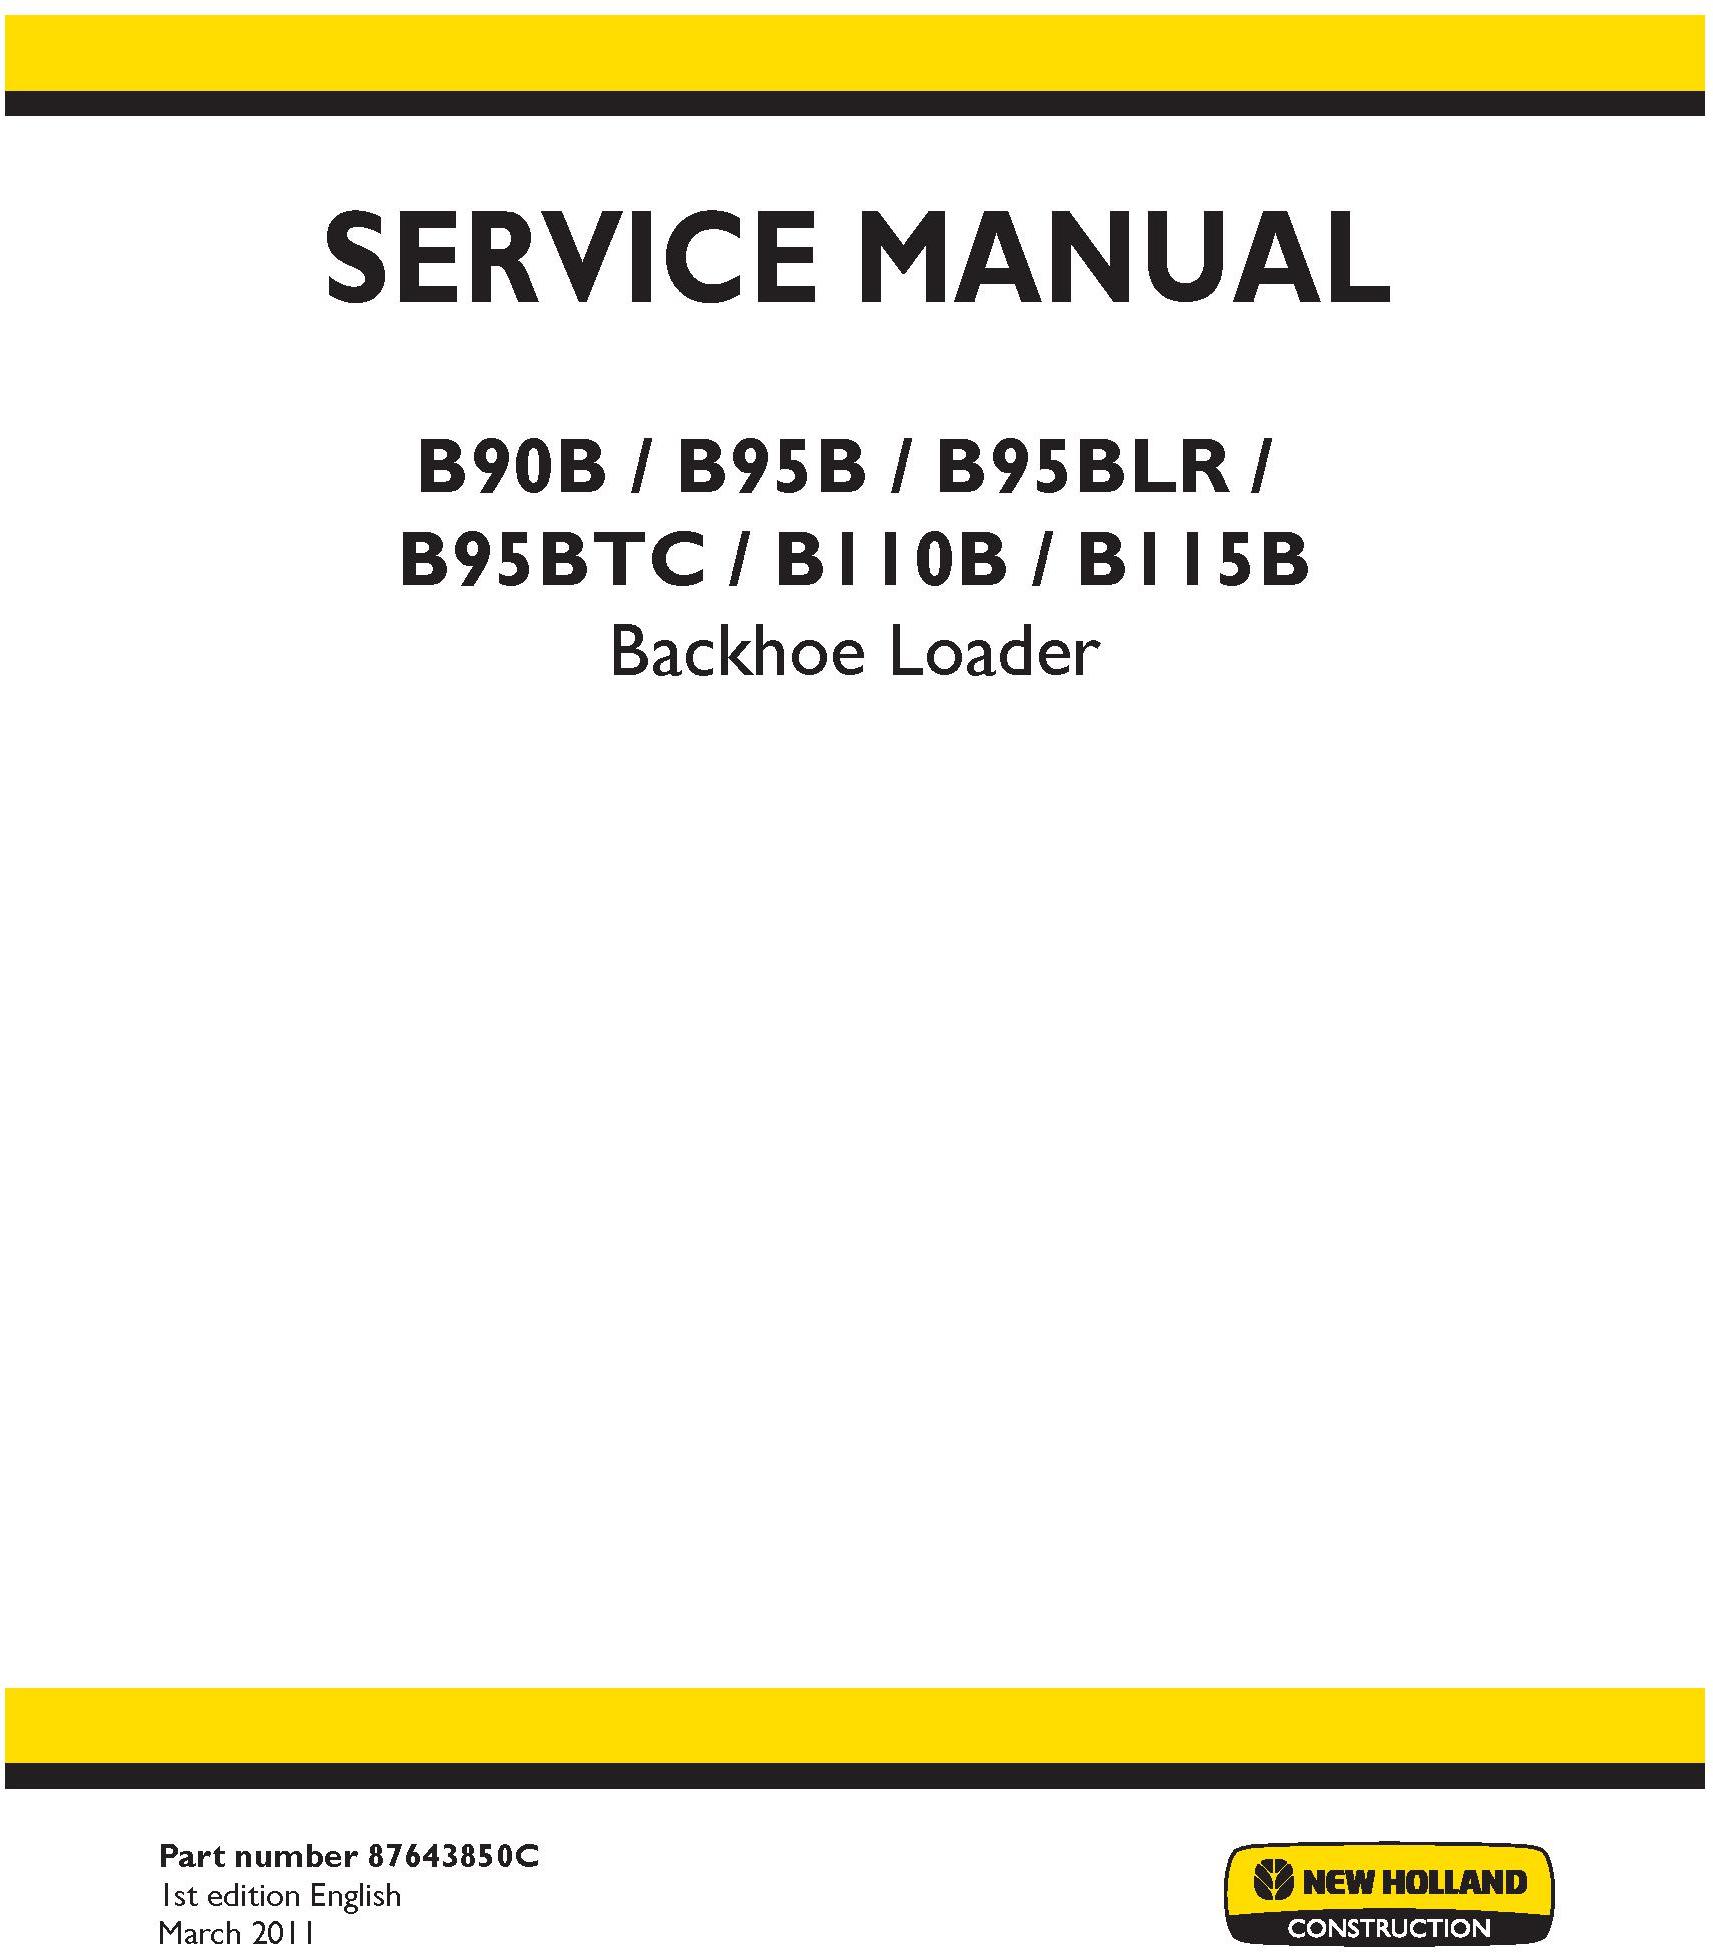 New Holland B90B, B95B, B95BLR, B95BTC, B110B, B115B Backhoe Loader Tier 3 Service Manual